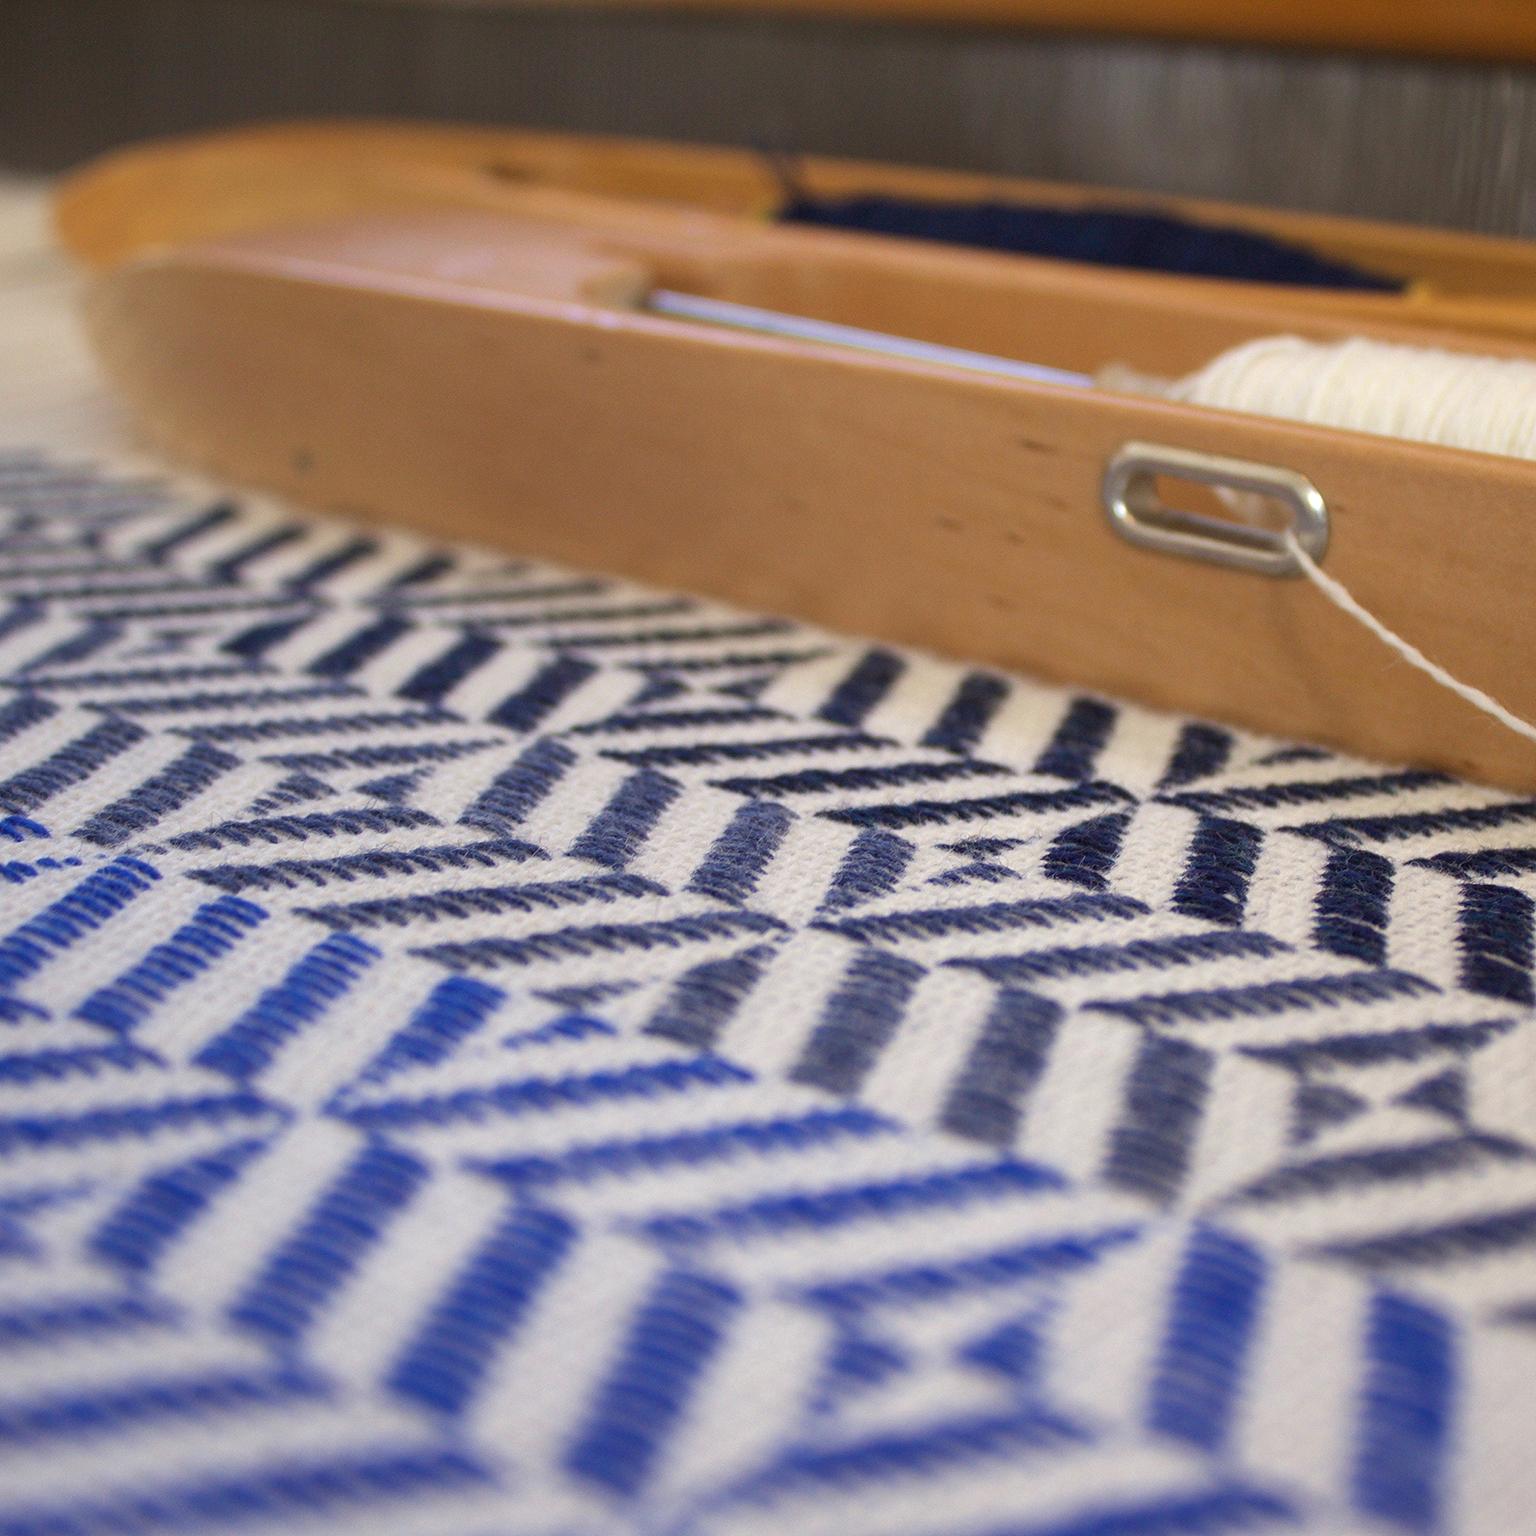 British 'Uccle' Woven Block Geometric Merino Wool Throw, Indigo/Colbalt Blue/Greys